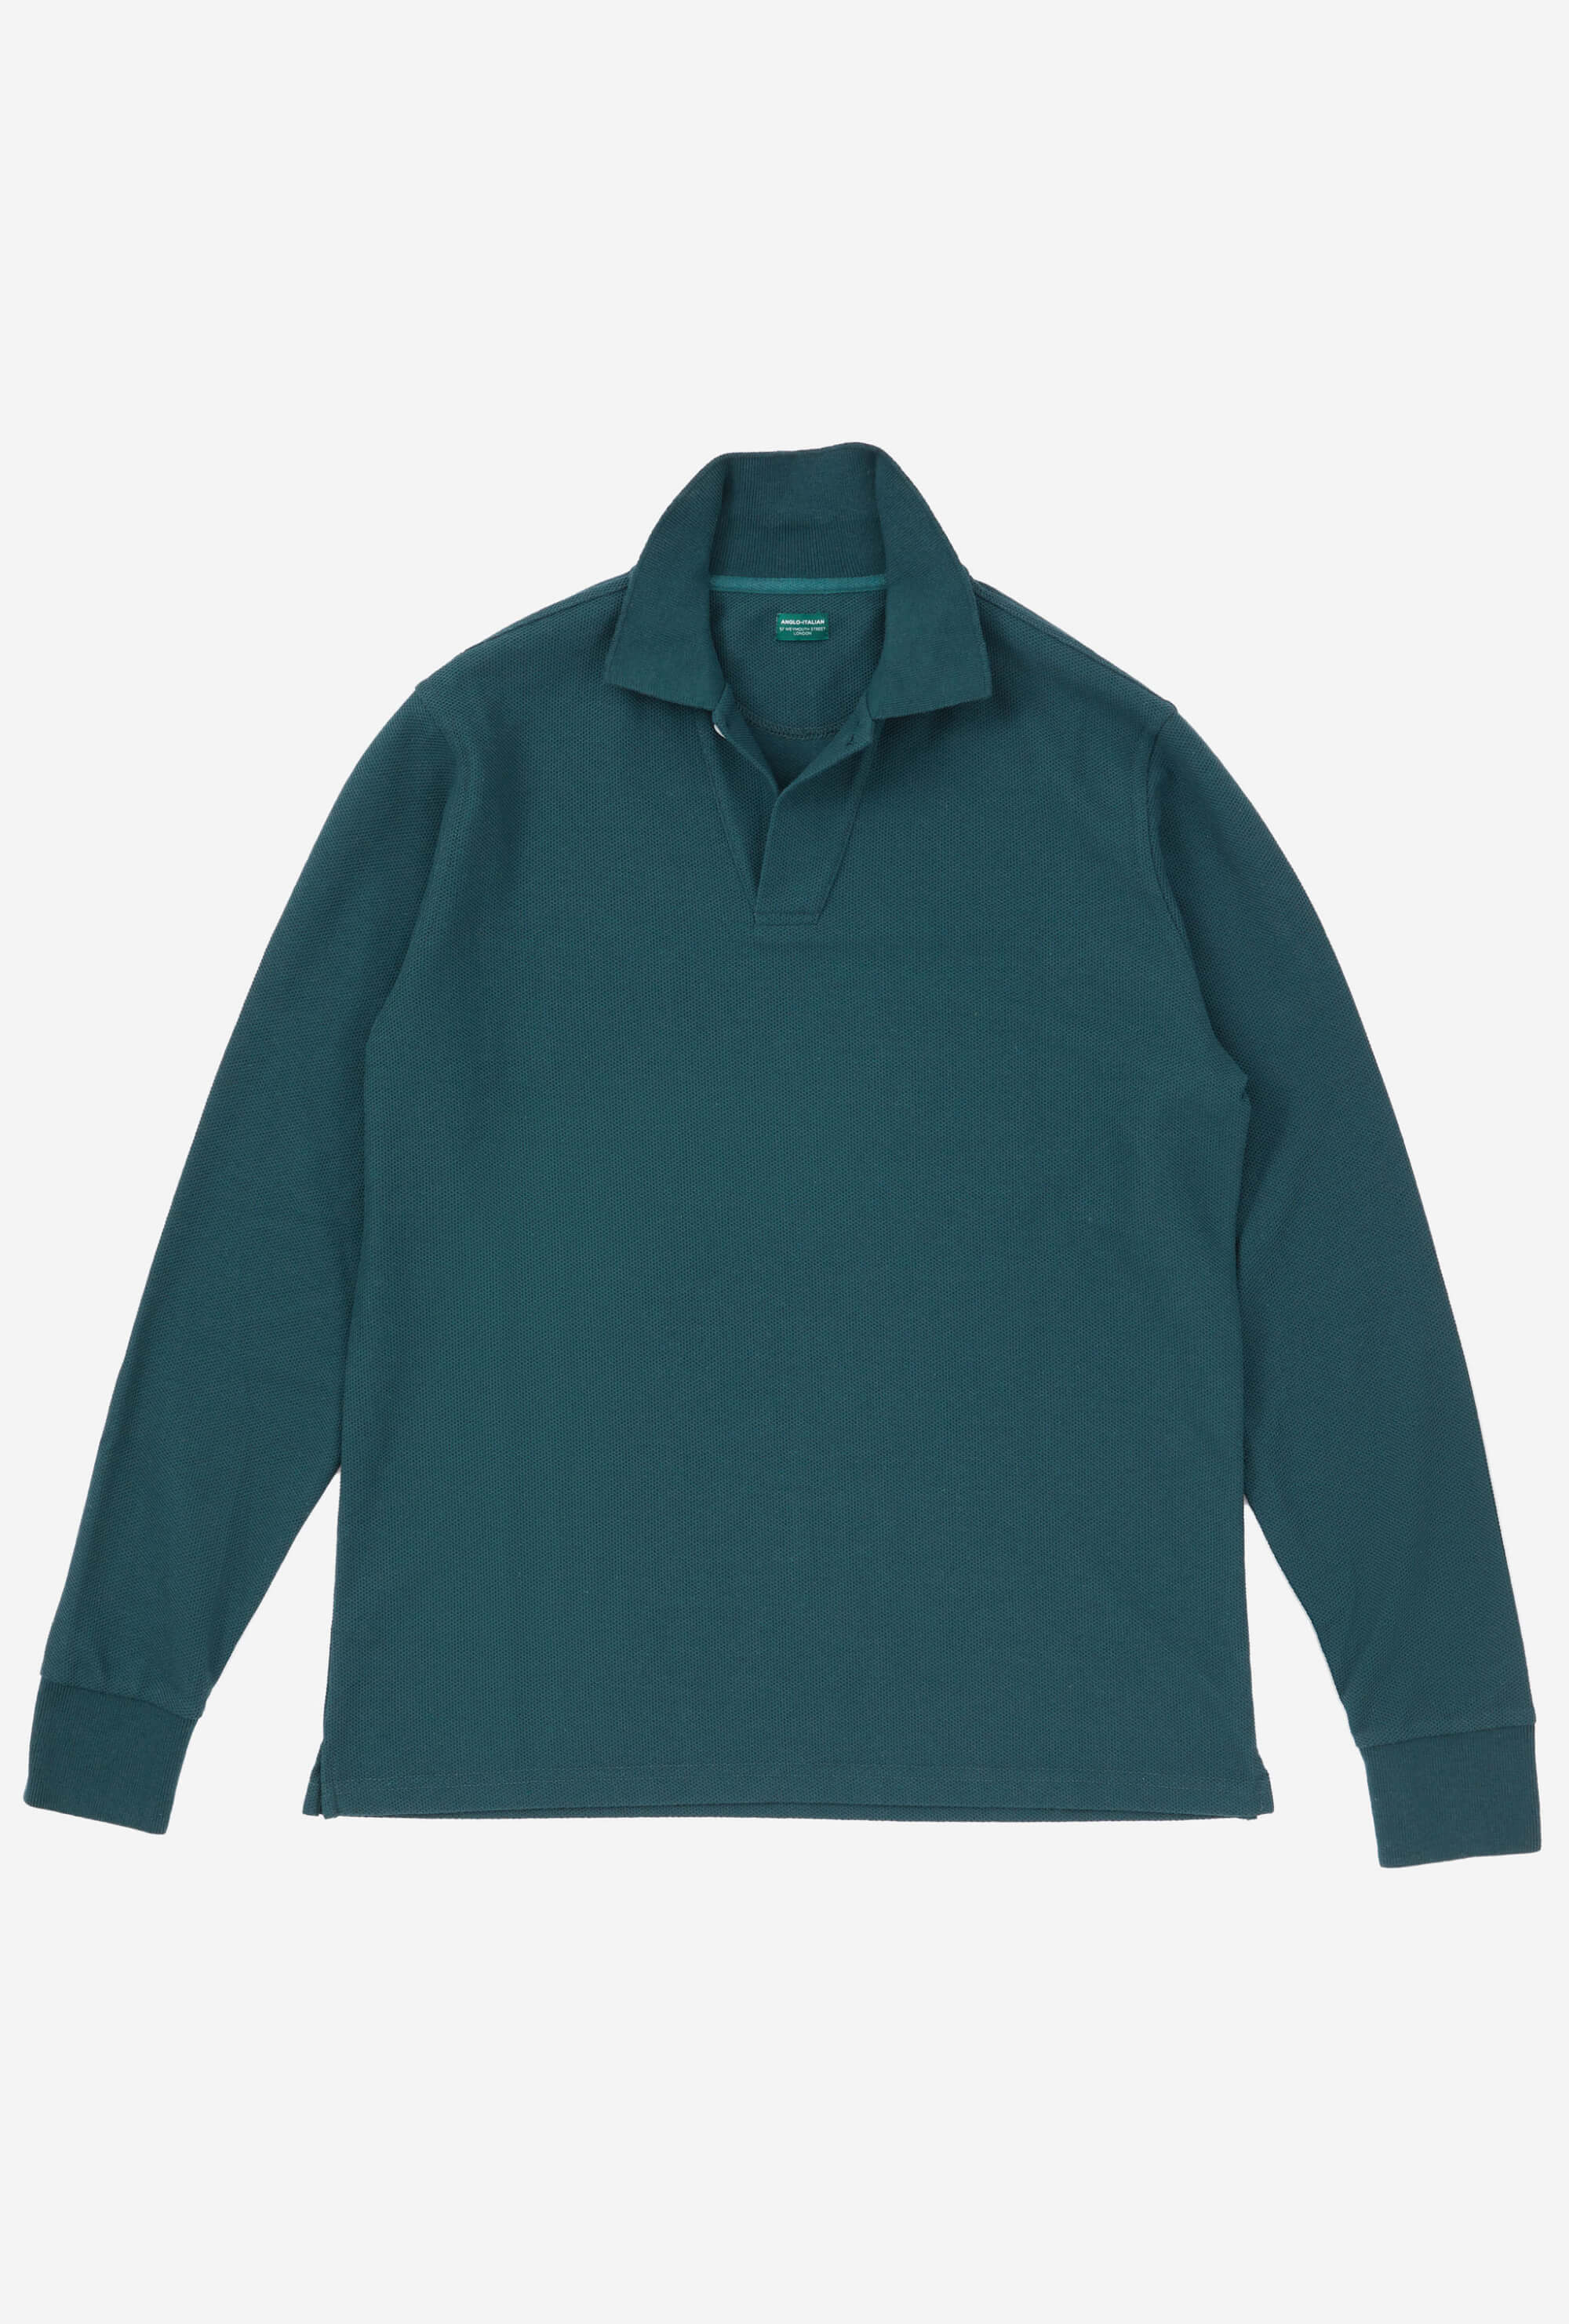 Sports Polo Long Sleeve Emerald